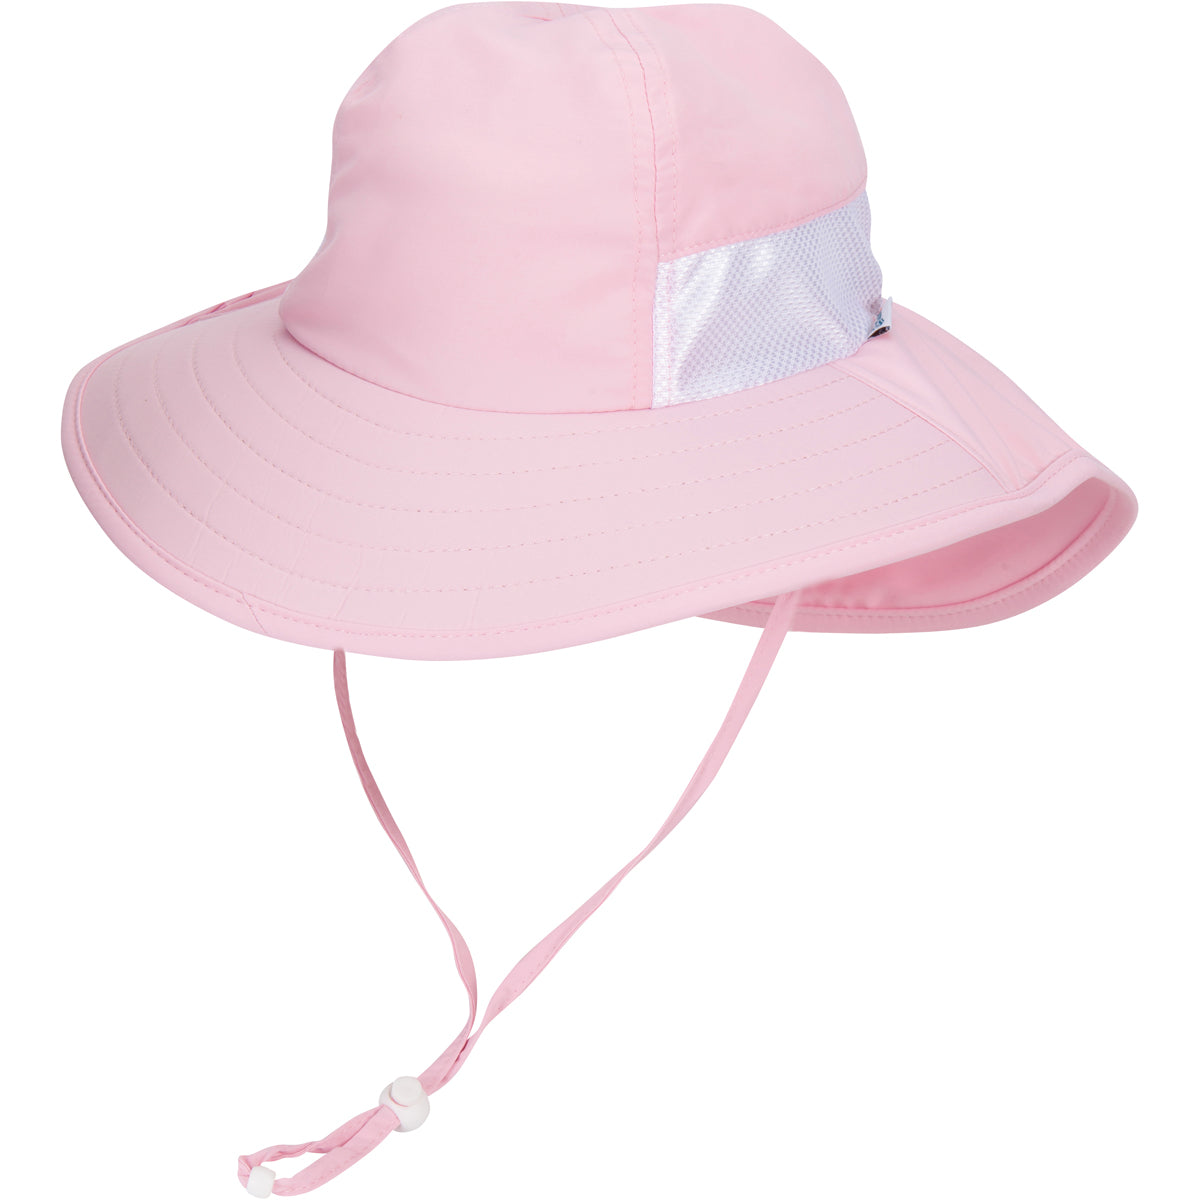 SwimZip Kids Wide Brim + Flap Neck Sun Protective Adventure Hat - Pink 0-6 Months / Pink